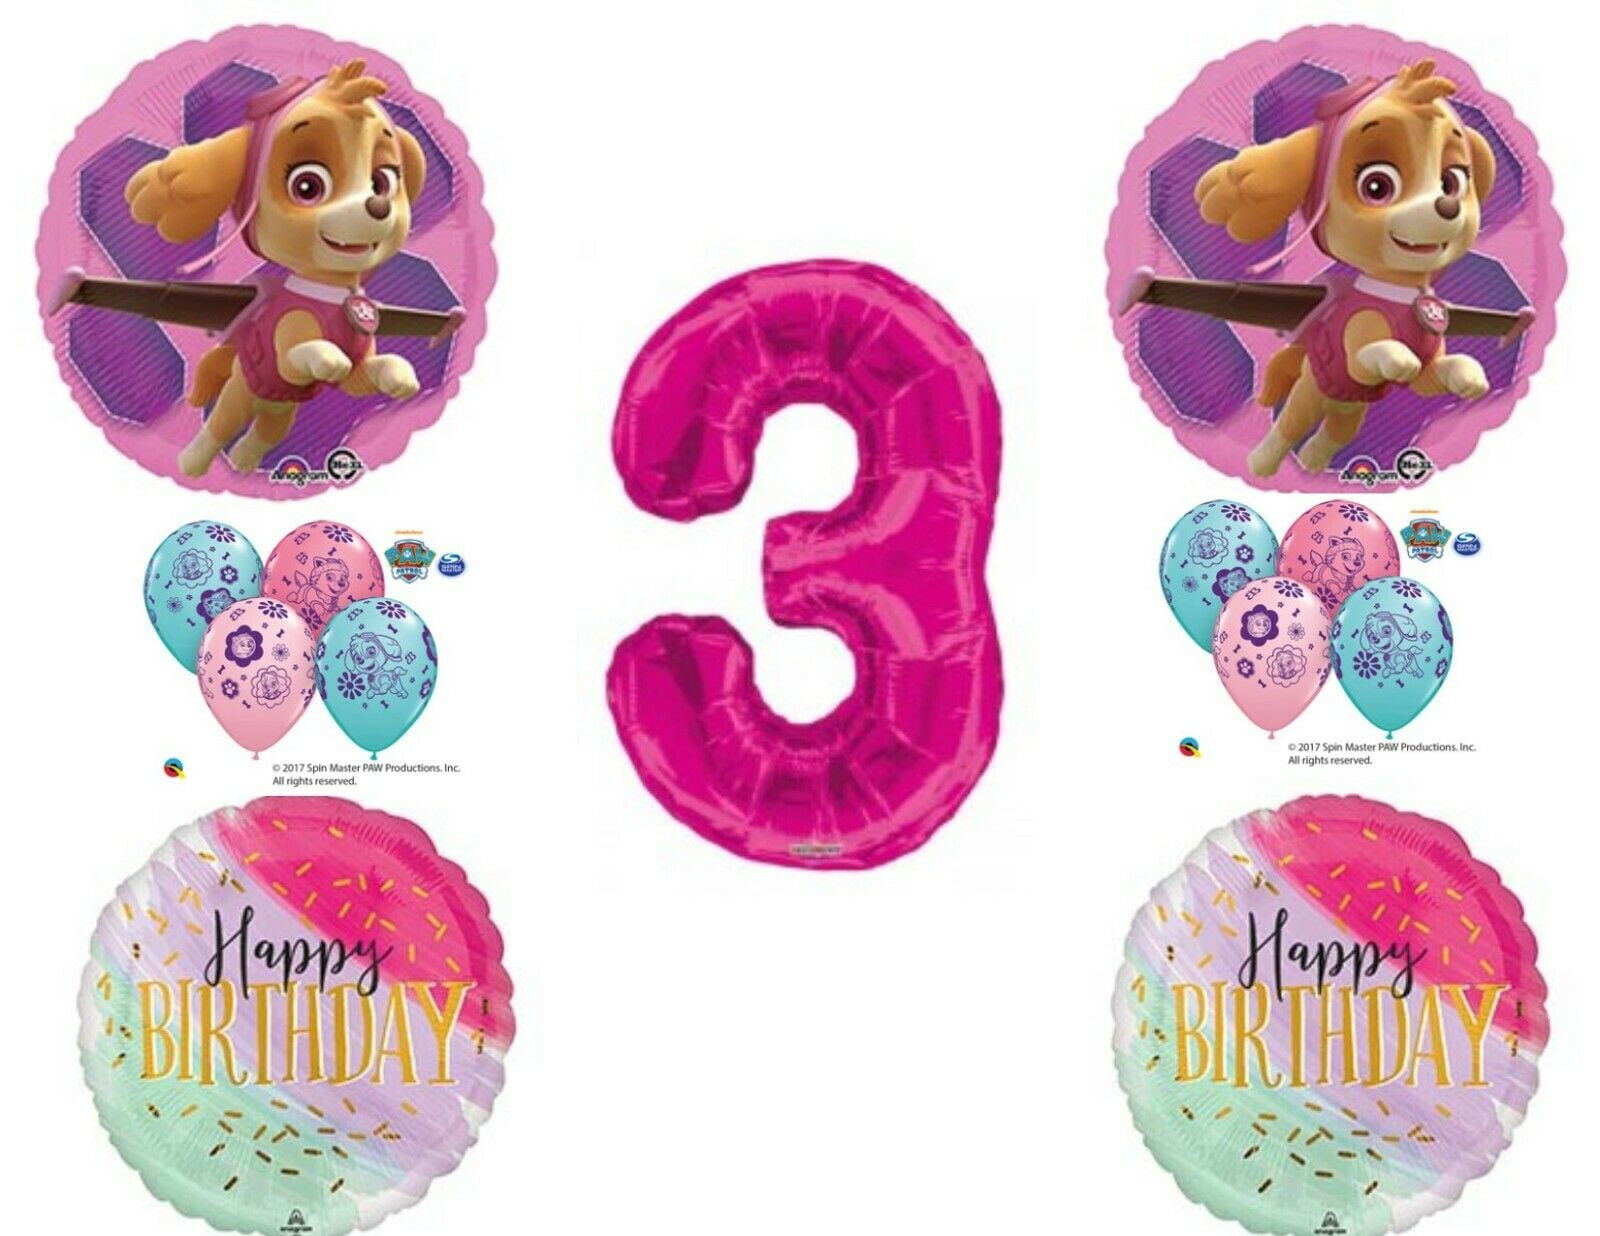 3rd Birthday & Everest Paw Patrol Girl Balloons Decoration Party - Walmart.com